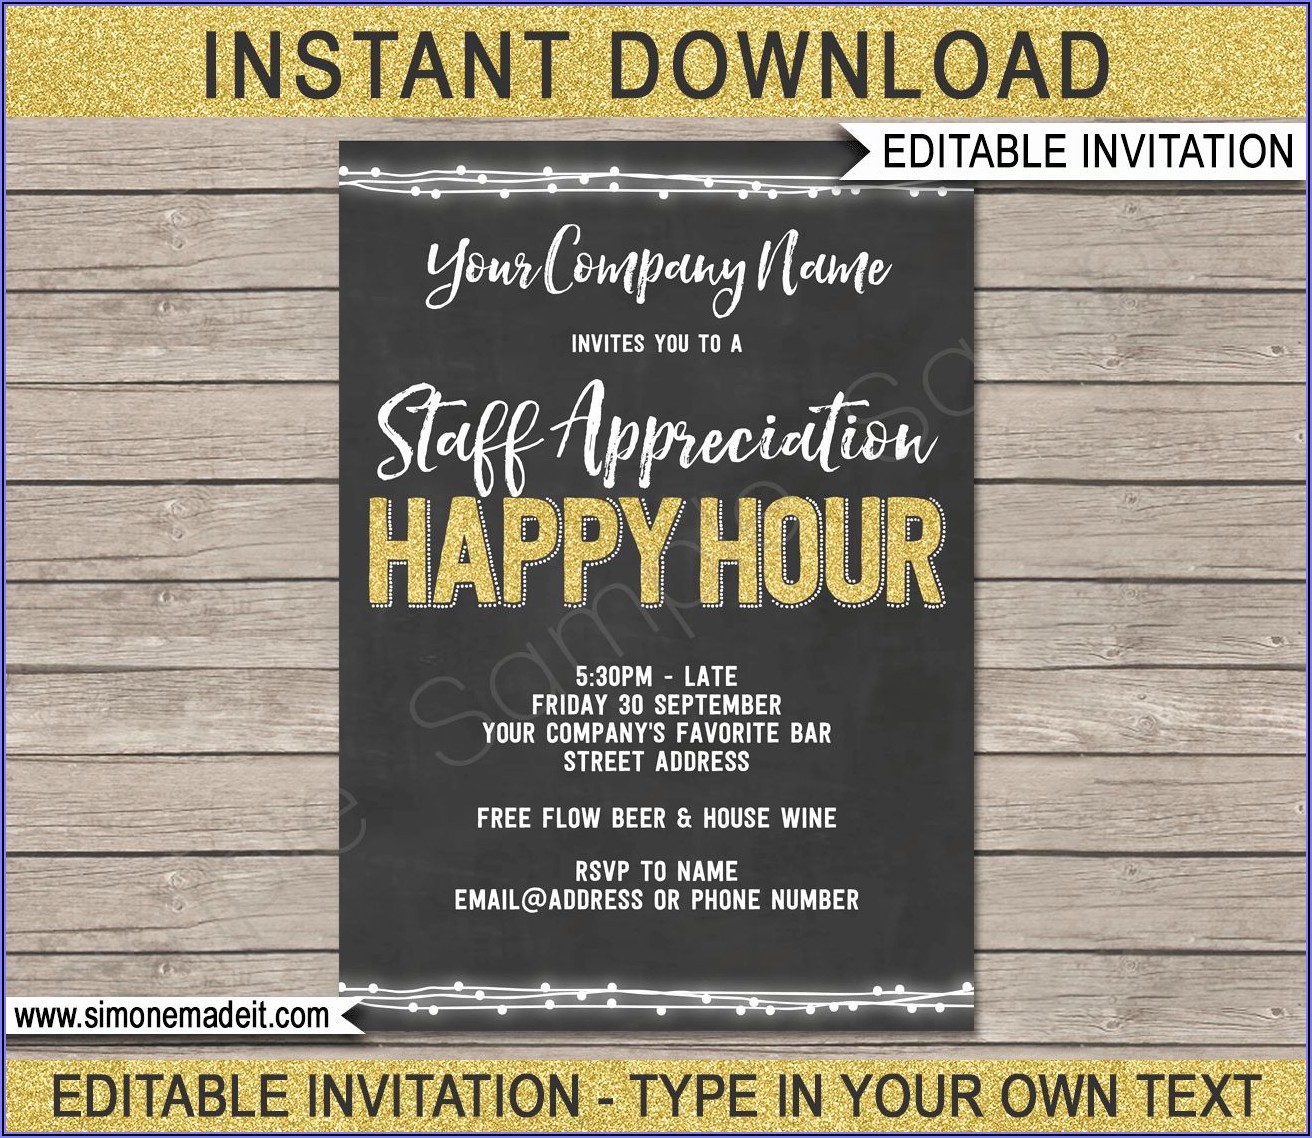 Happy Hour Invite Template Free